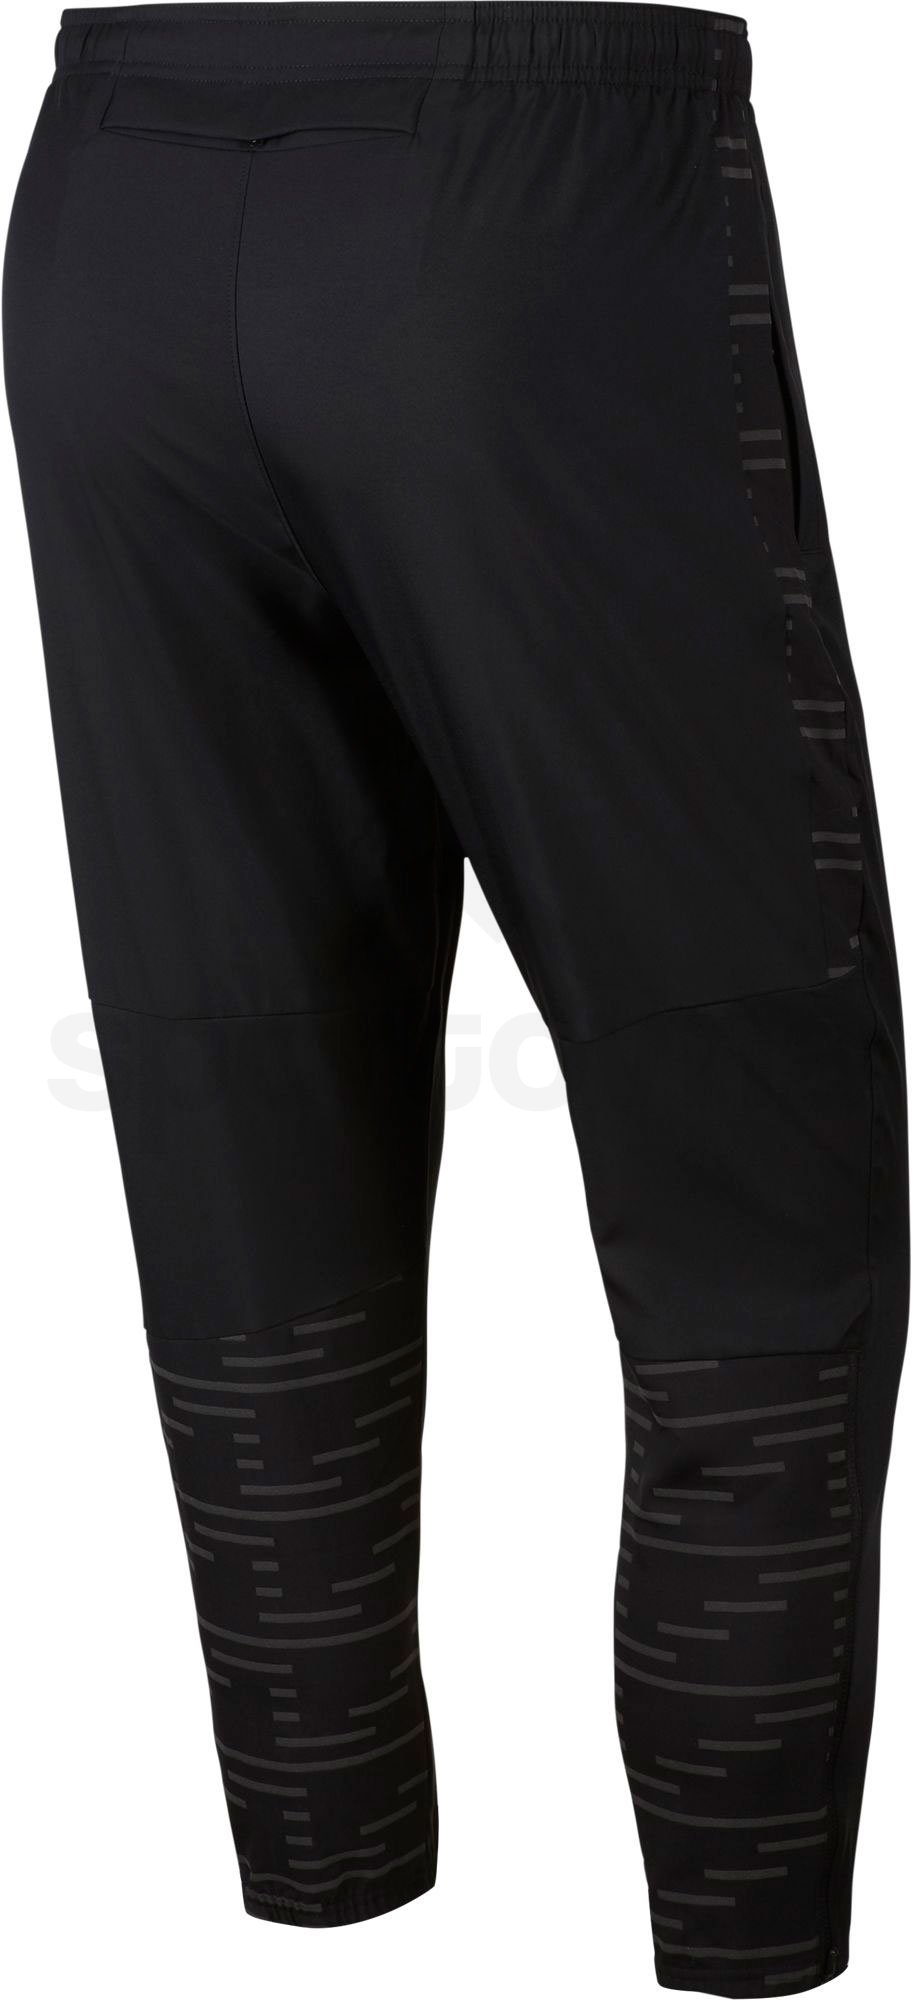 Kalhoty Nike Dri-FIT Run Division Challenger M - černá